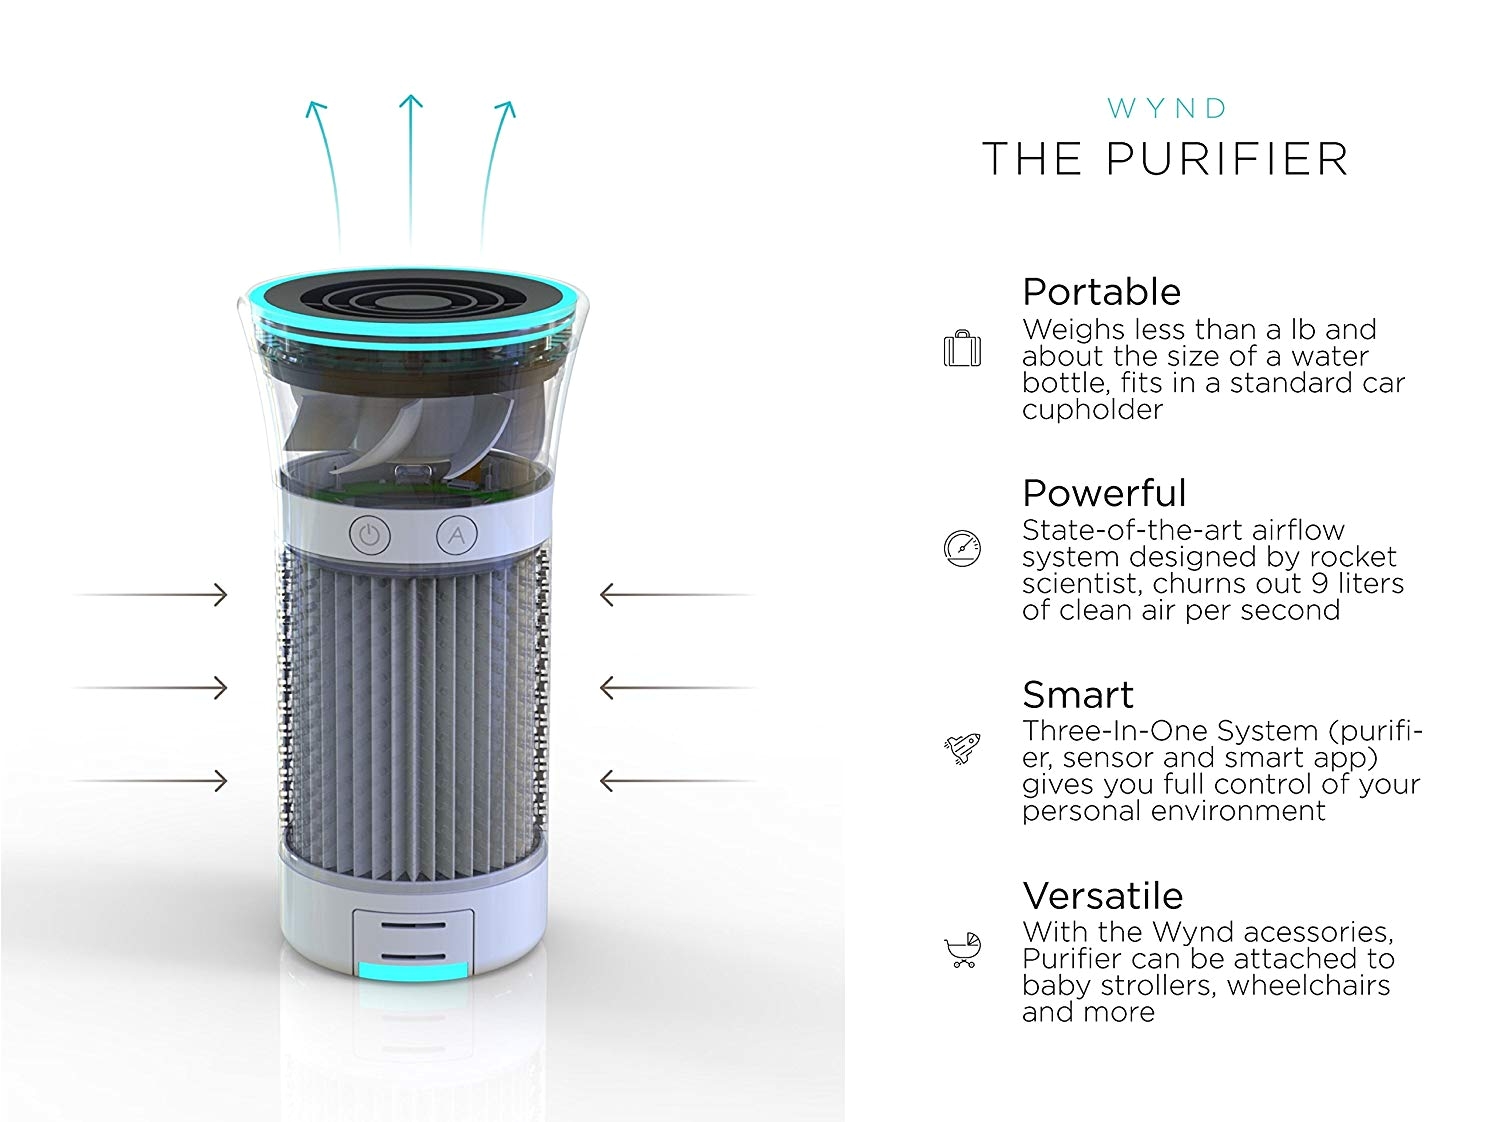 Best Bedroom Air Purifier 2018 Amazon Com Wynd Plus Smart Portable Air Purifier with Detachable